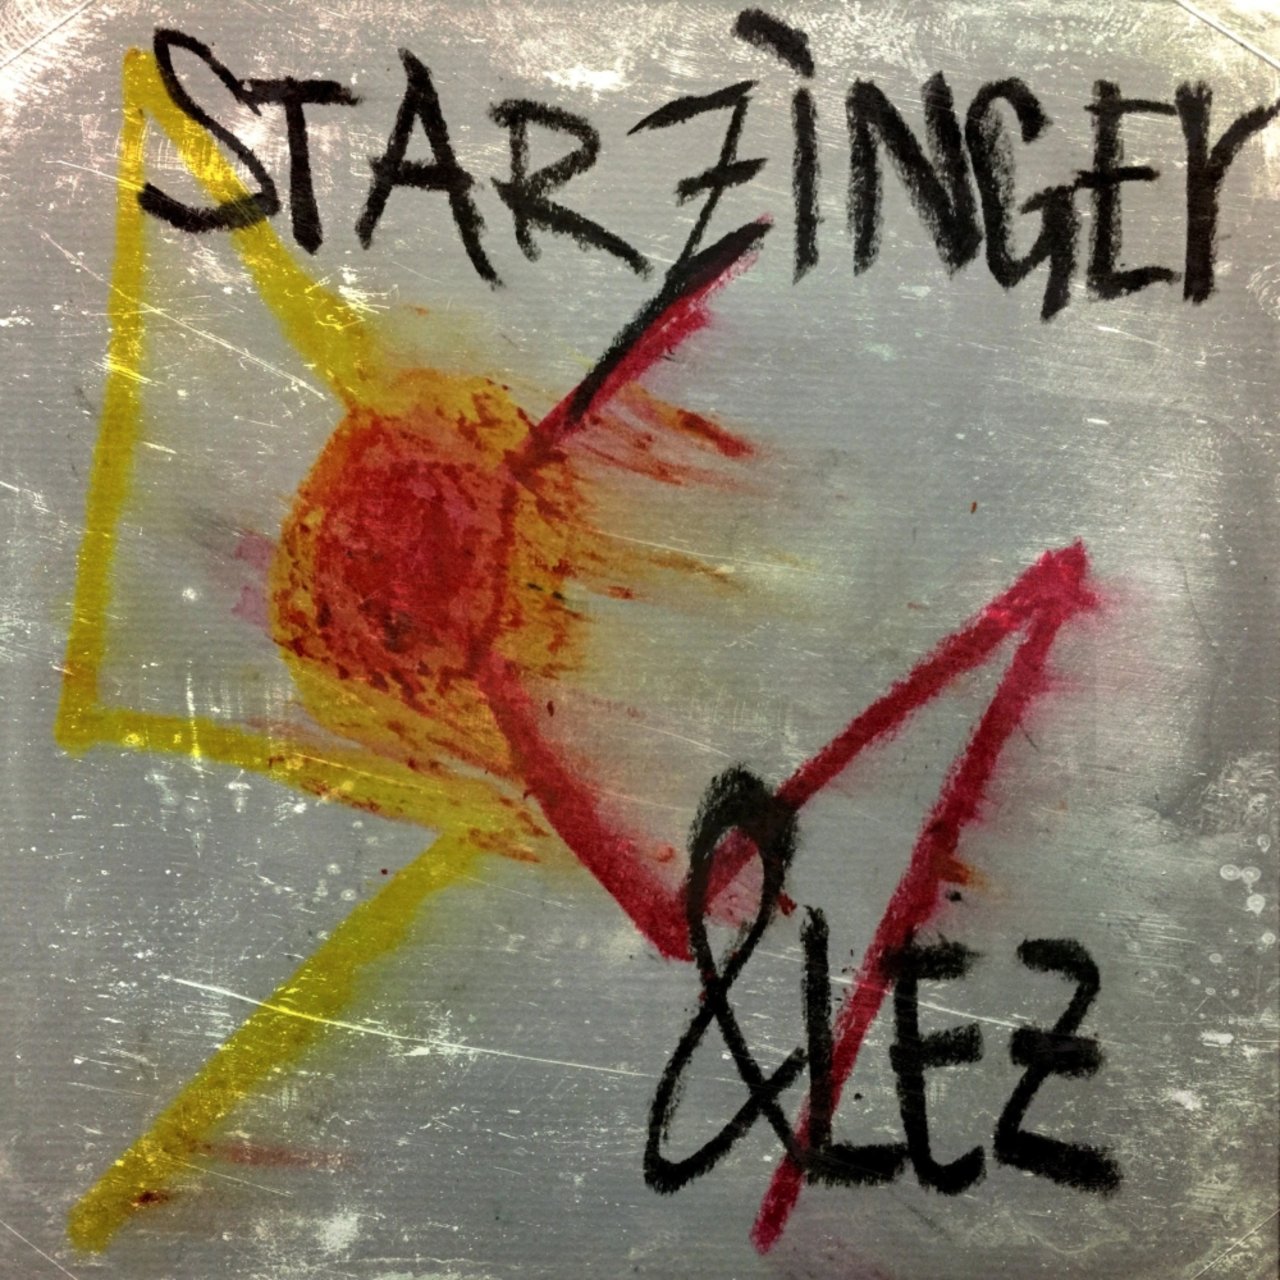 &lez - Starzinger / Visile Records